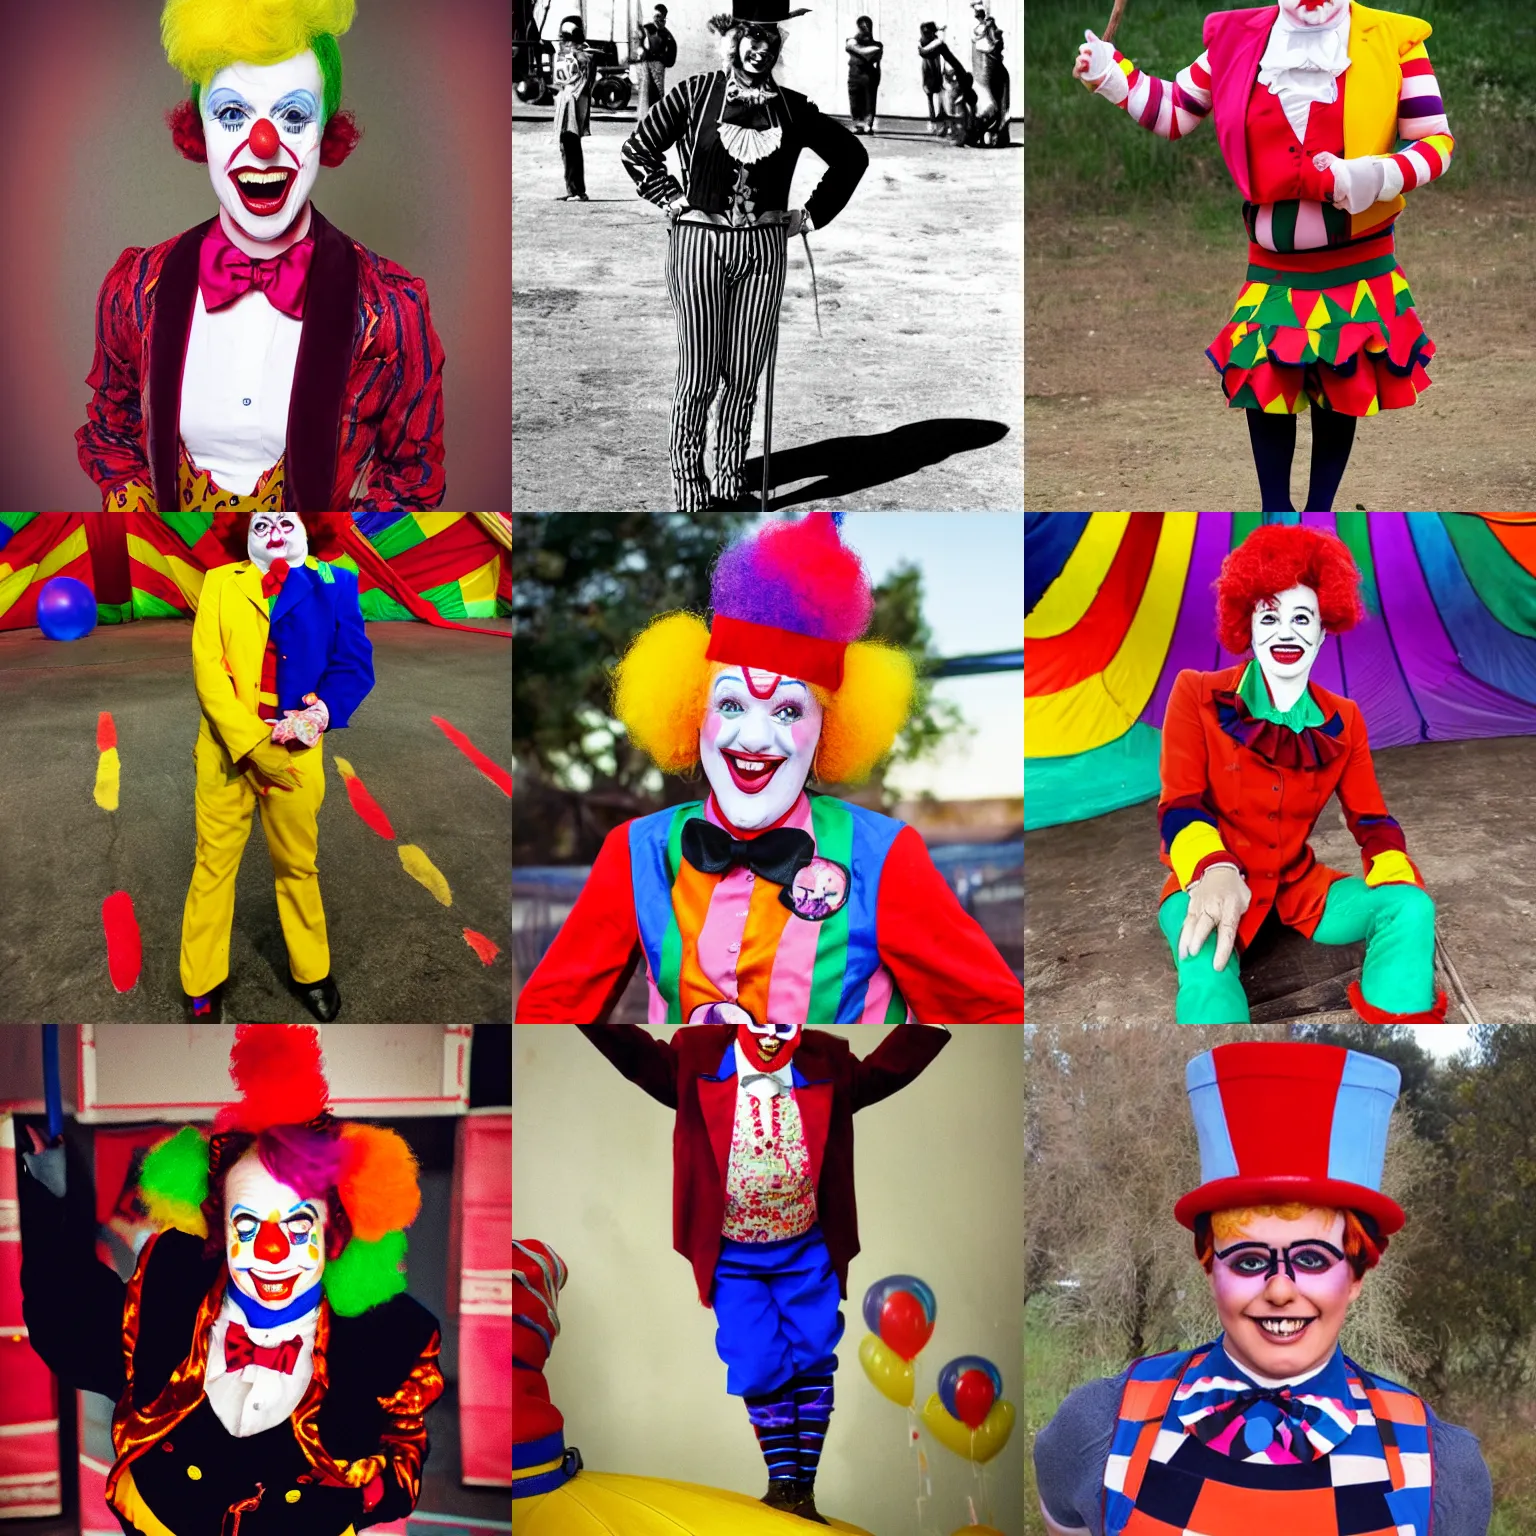 Prompt: lesbian circus clown